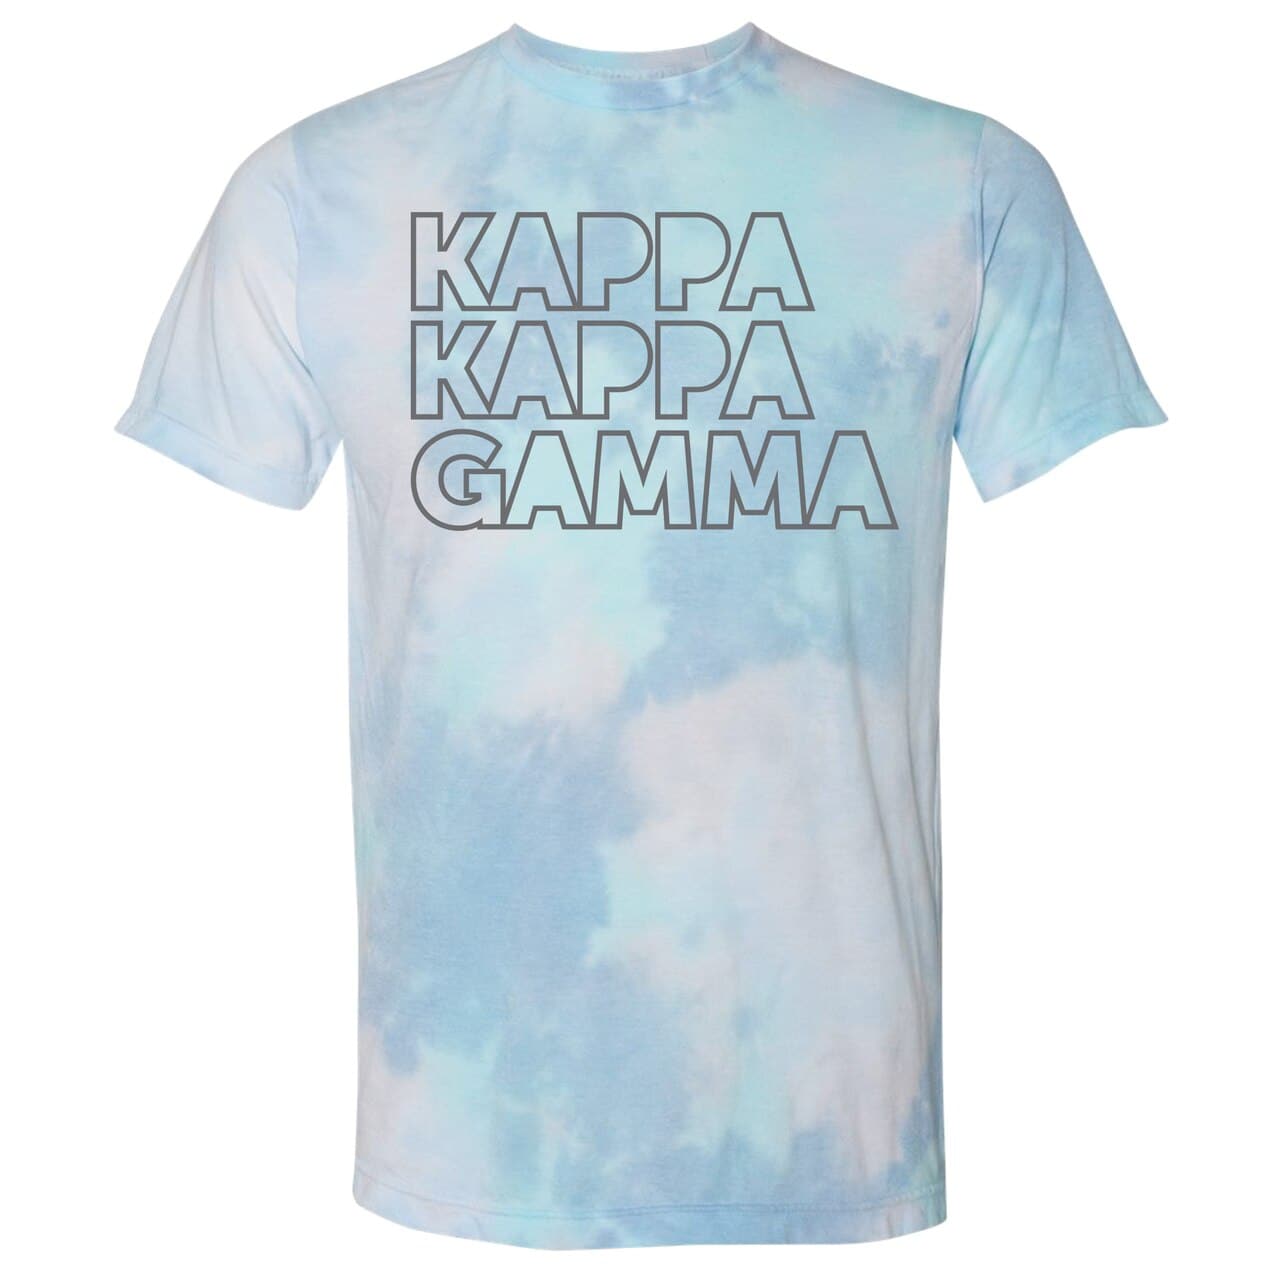 Kappa Super Soft Tie Dye Tee | Kappa Kappa Gamma | Shirts > Short sleeve t-shirts